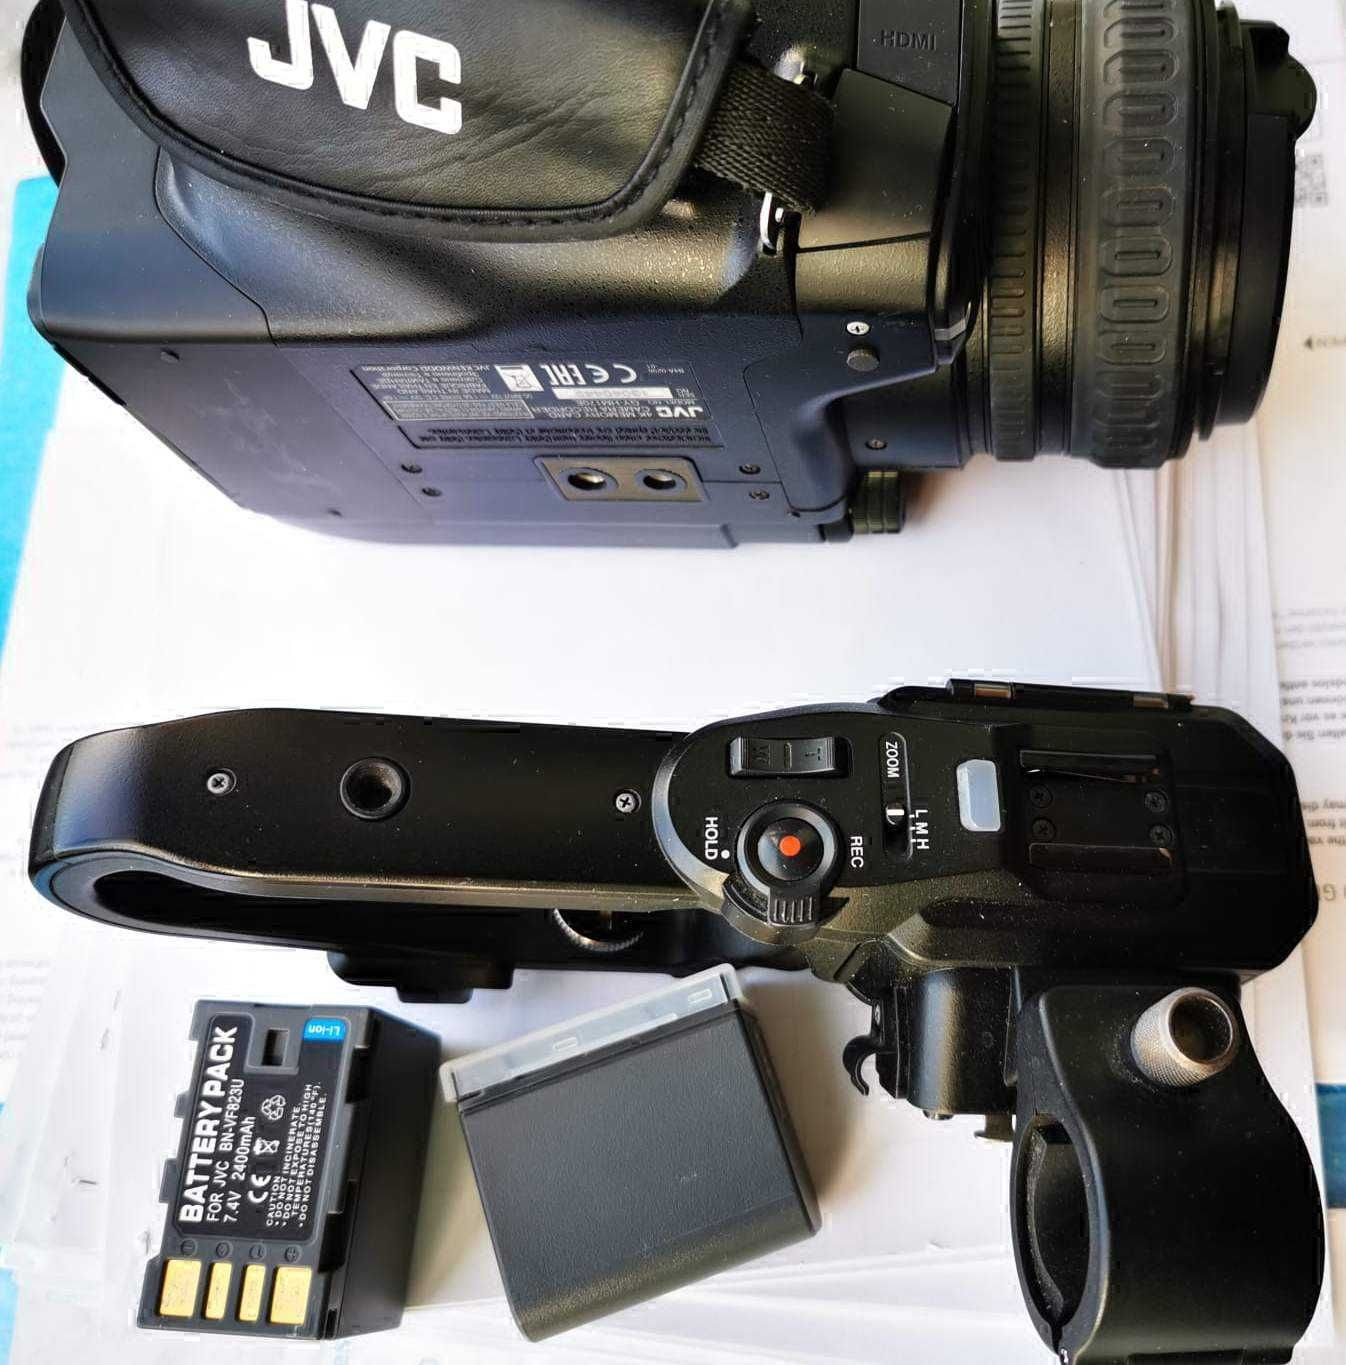 Vand sau Schimb Camera video JVC GY-HM170E 4KCAM